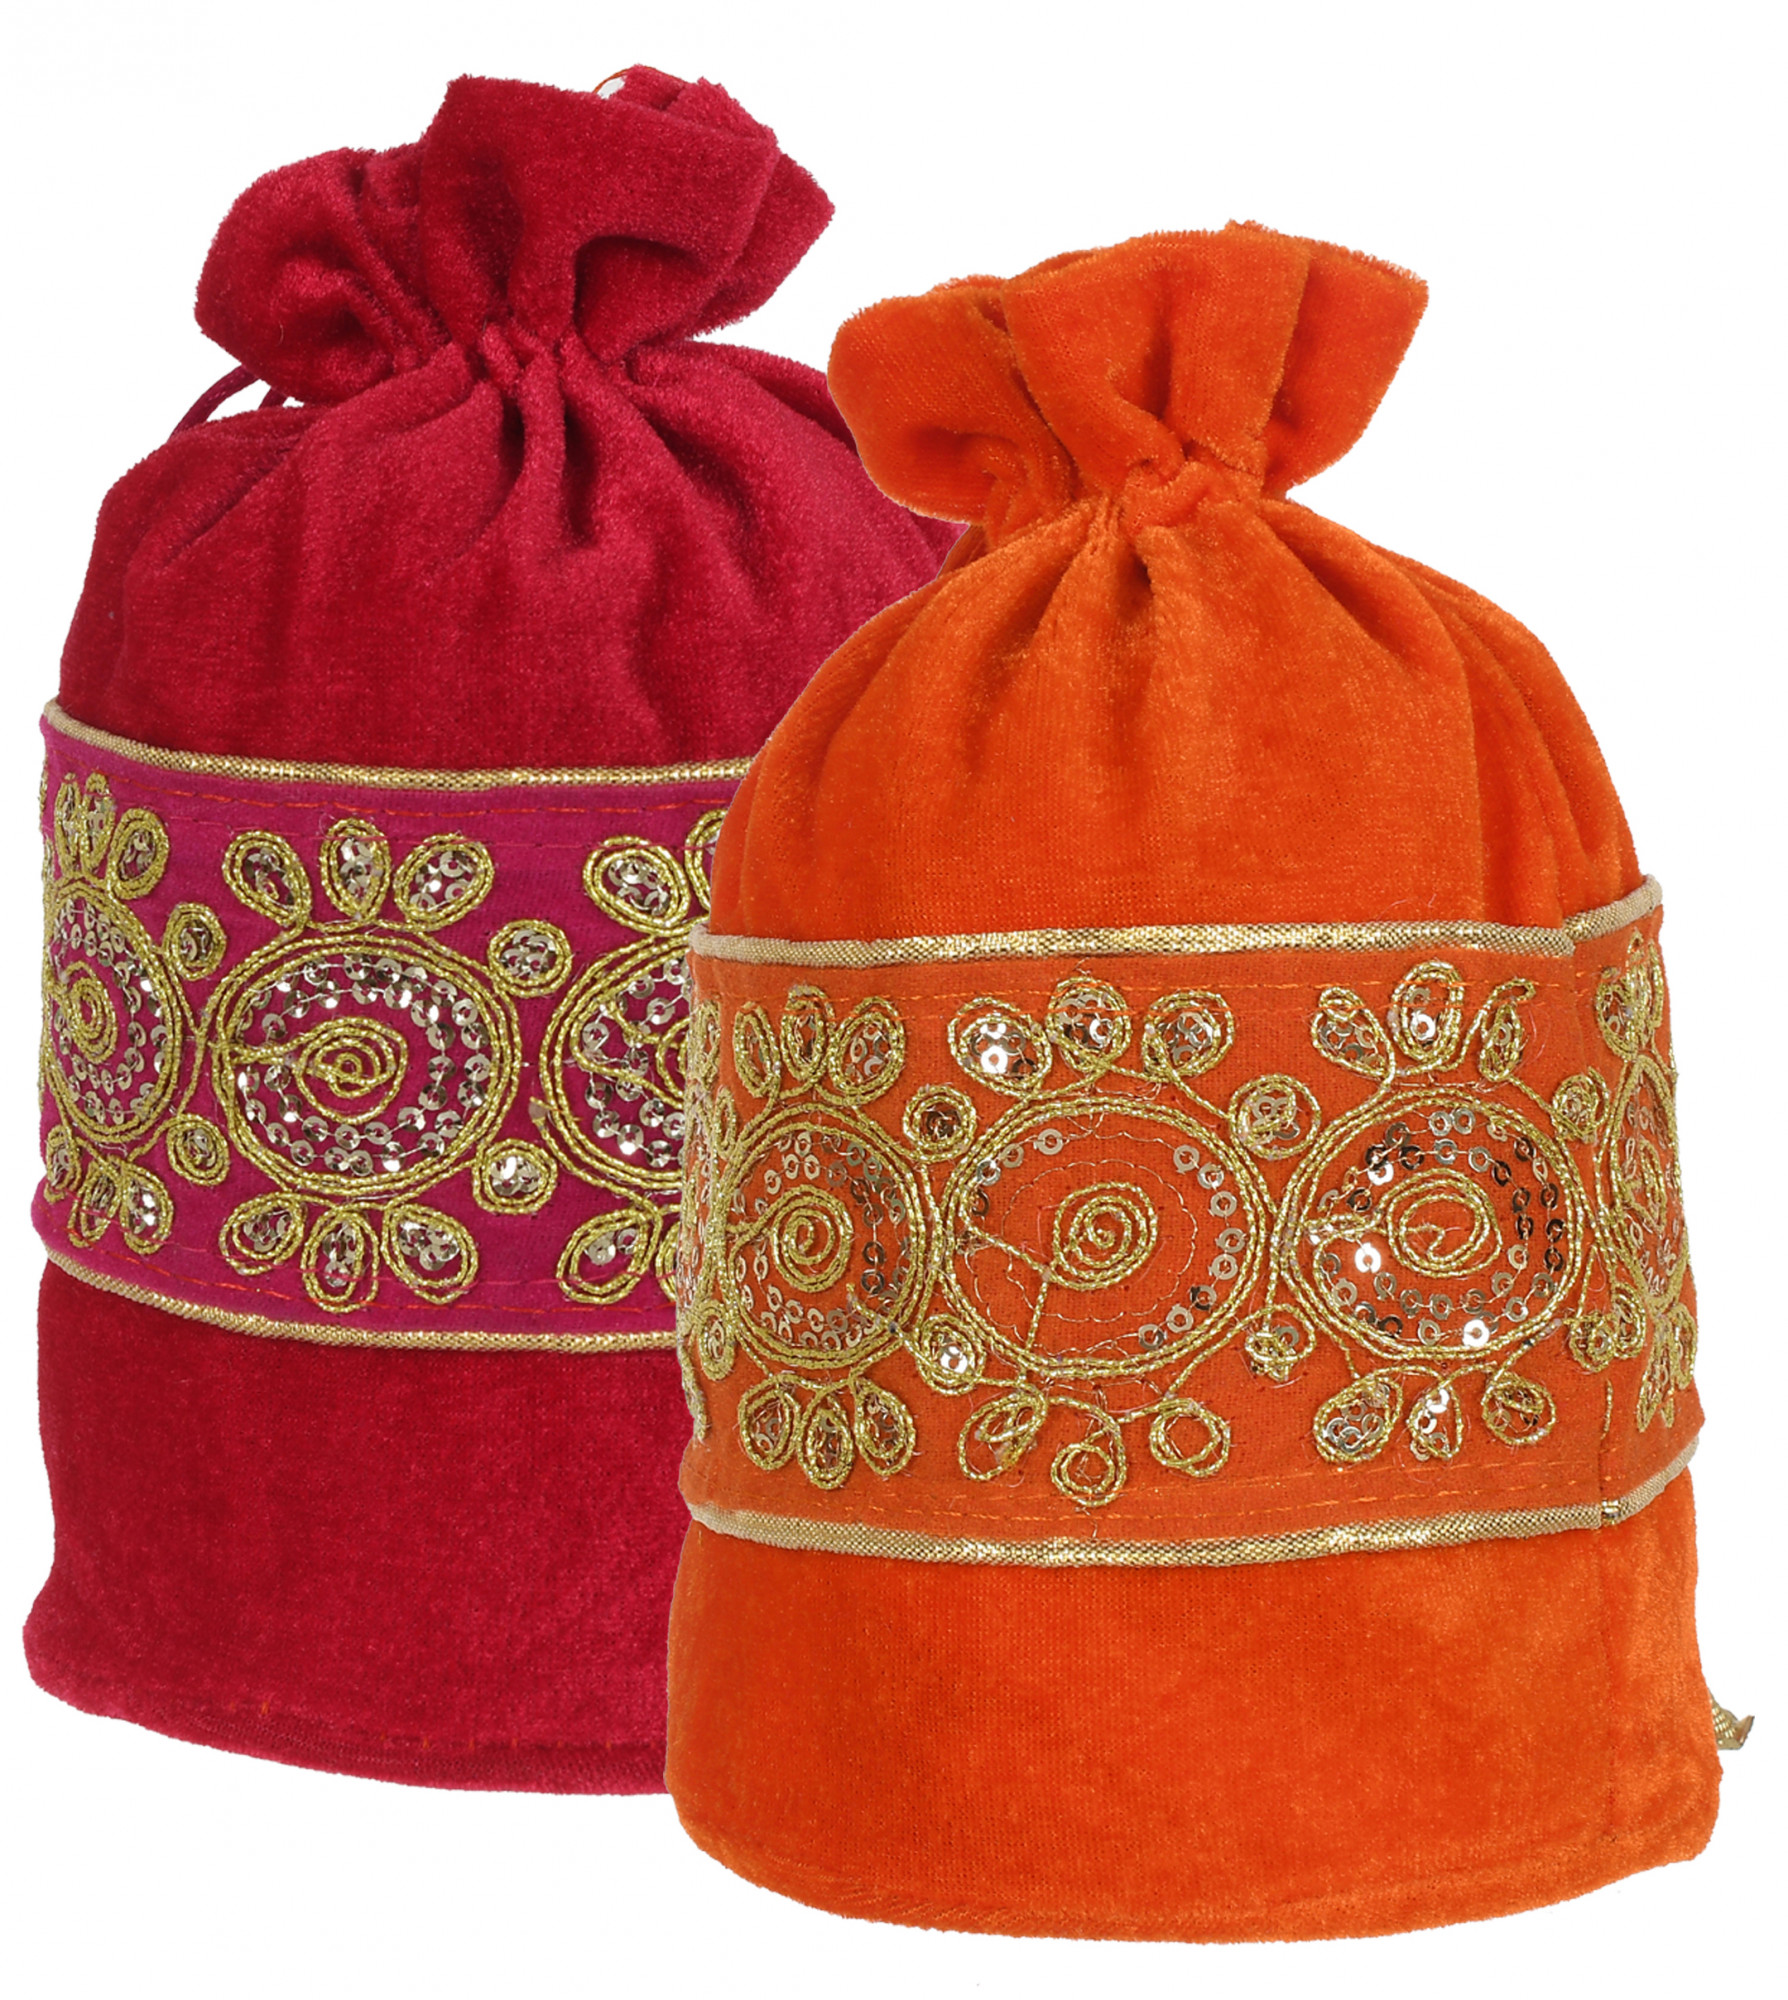 Kuber Industries Embroidered Design Drawstring Potli Bag Party Wedding Favor Gift Jewelry Bags-(Pink & Orange)